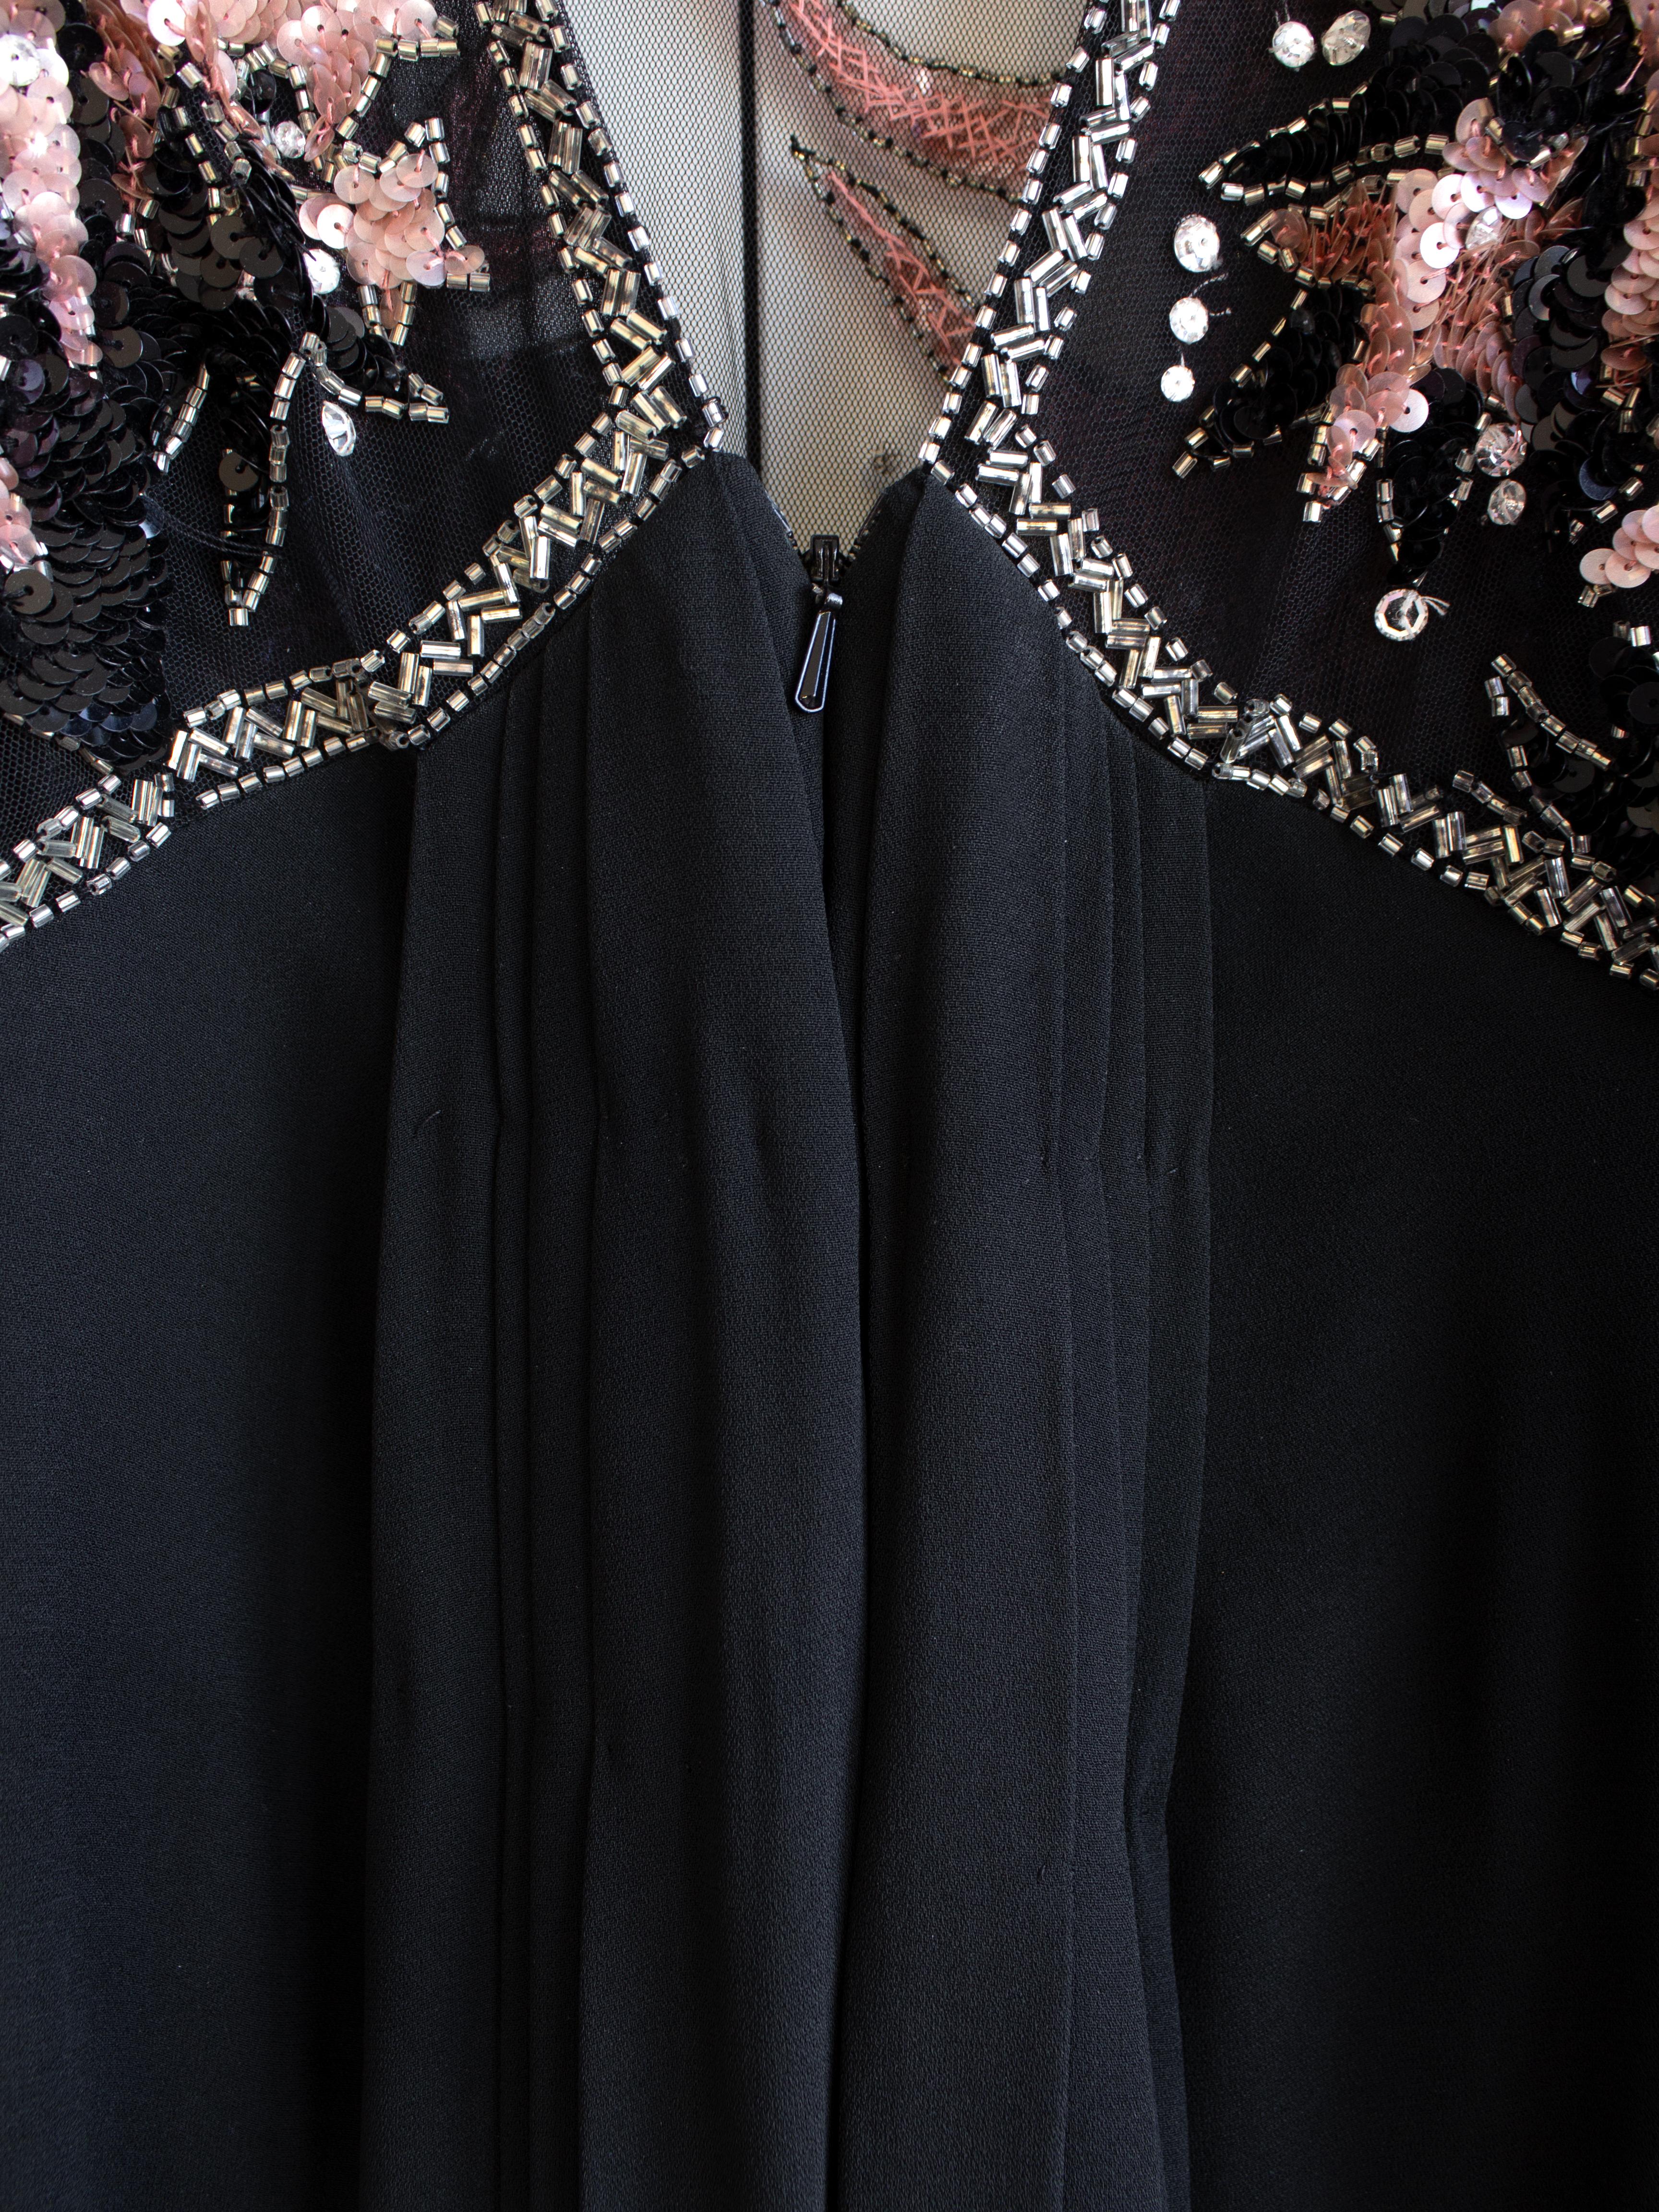 Bob Mackie Vintage 1980s Celestial Moon Stars Sequin Embellished Pink Black Gown For Sale 7